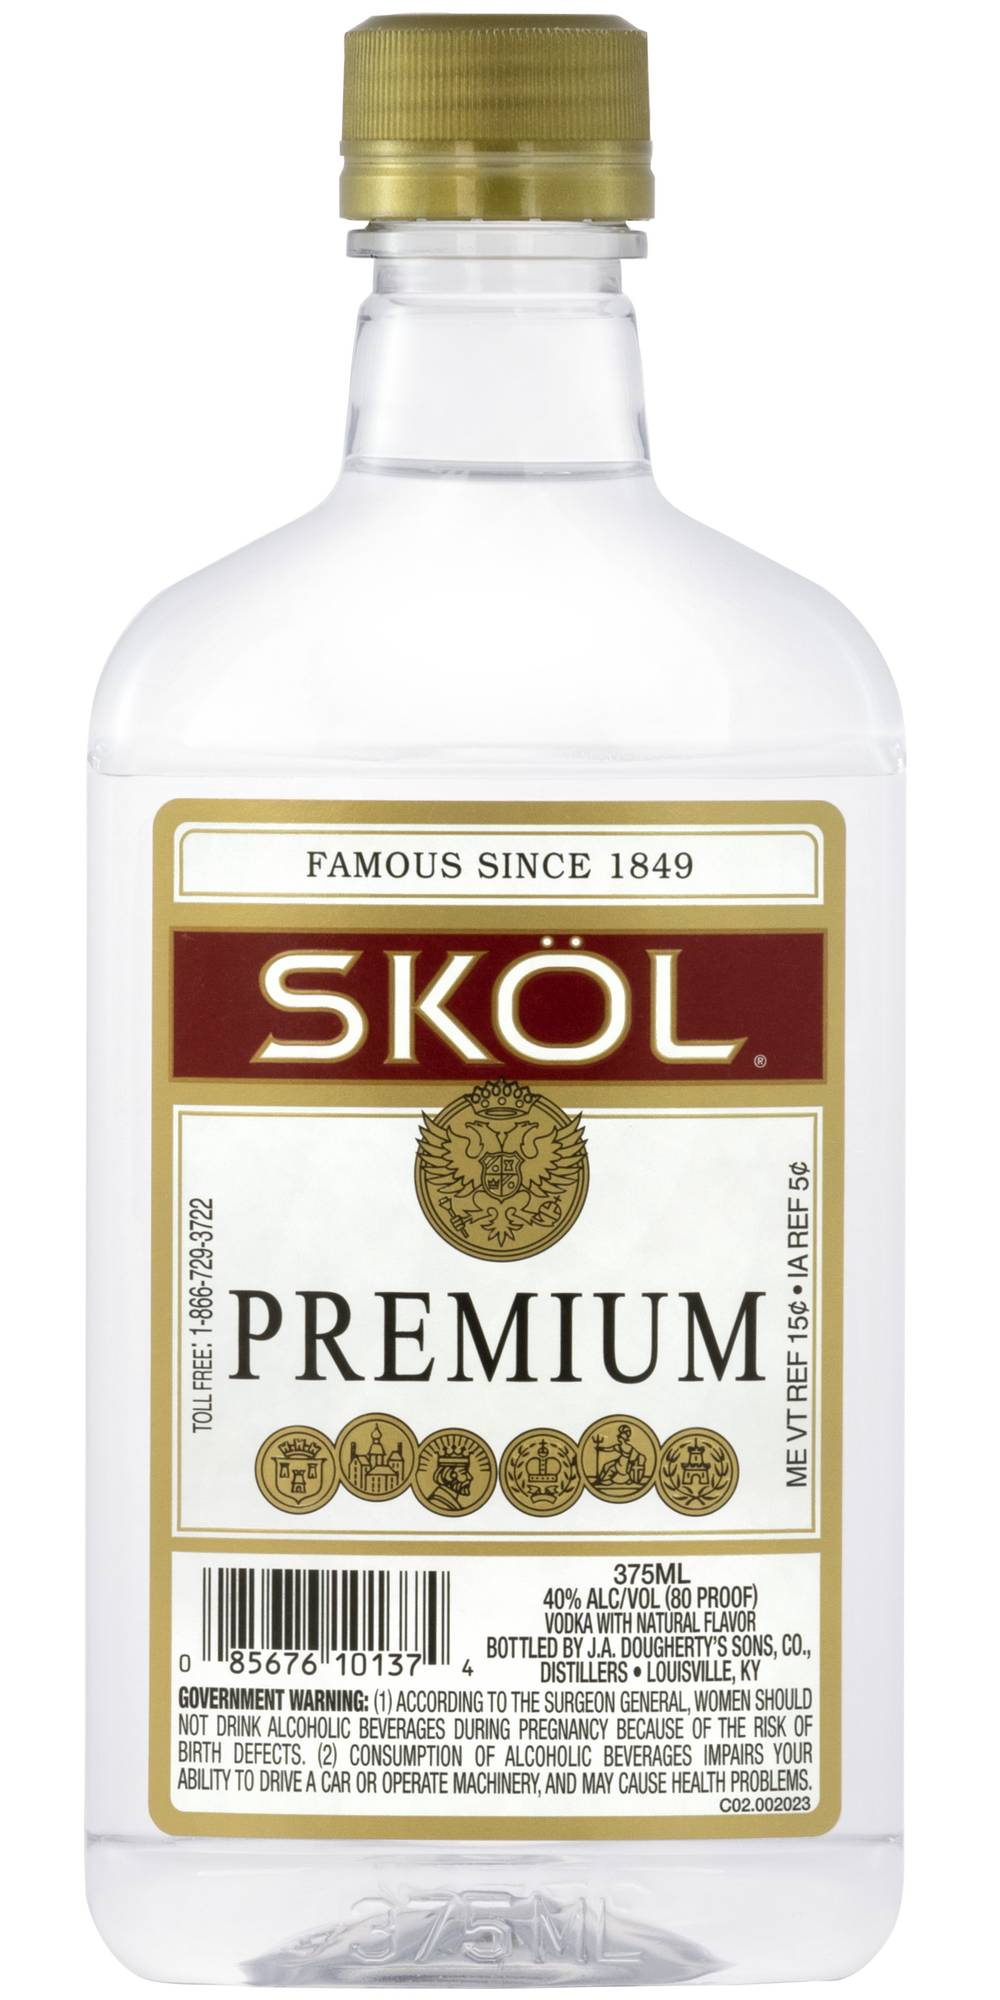 Skol Vodka 80 Proof (375 ml)